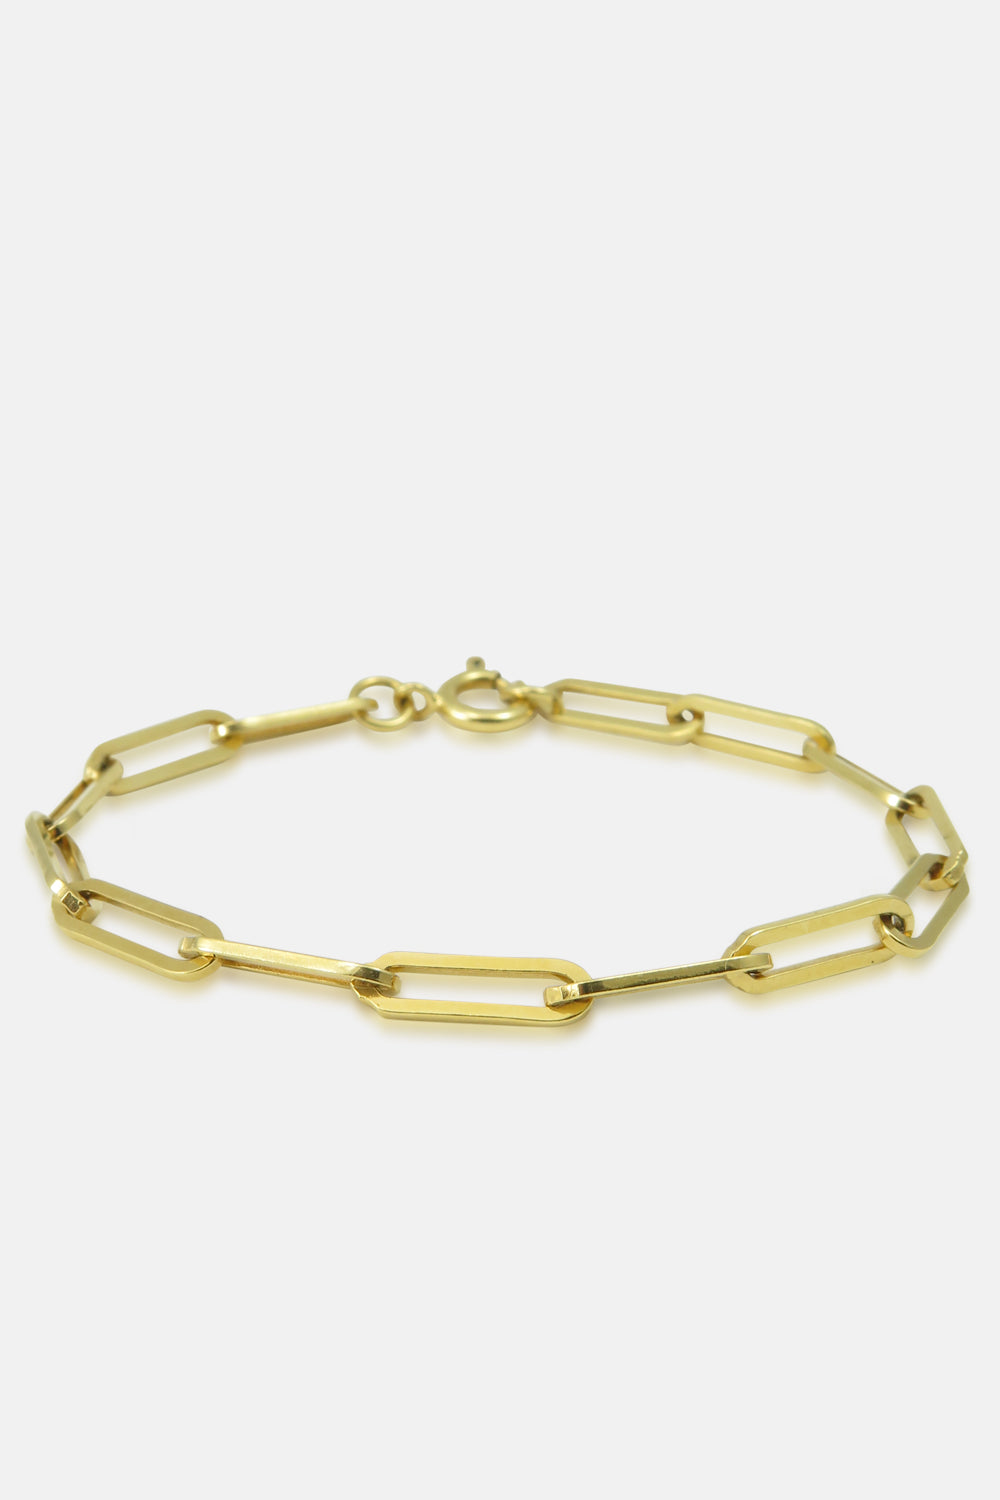 Medium link chain bracelet